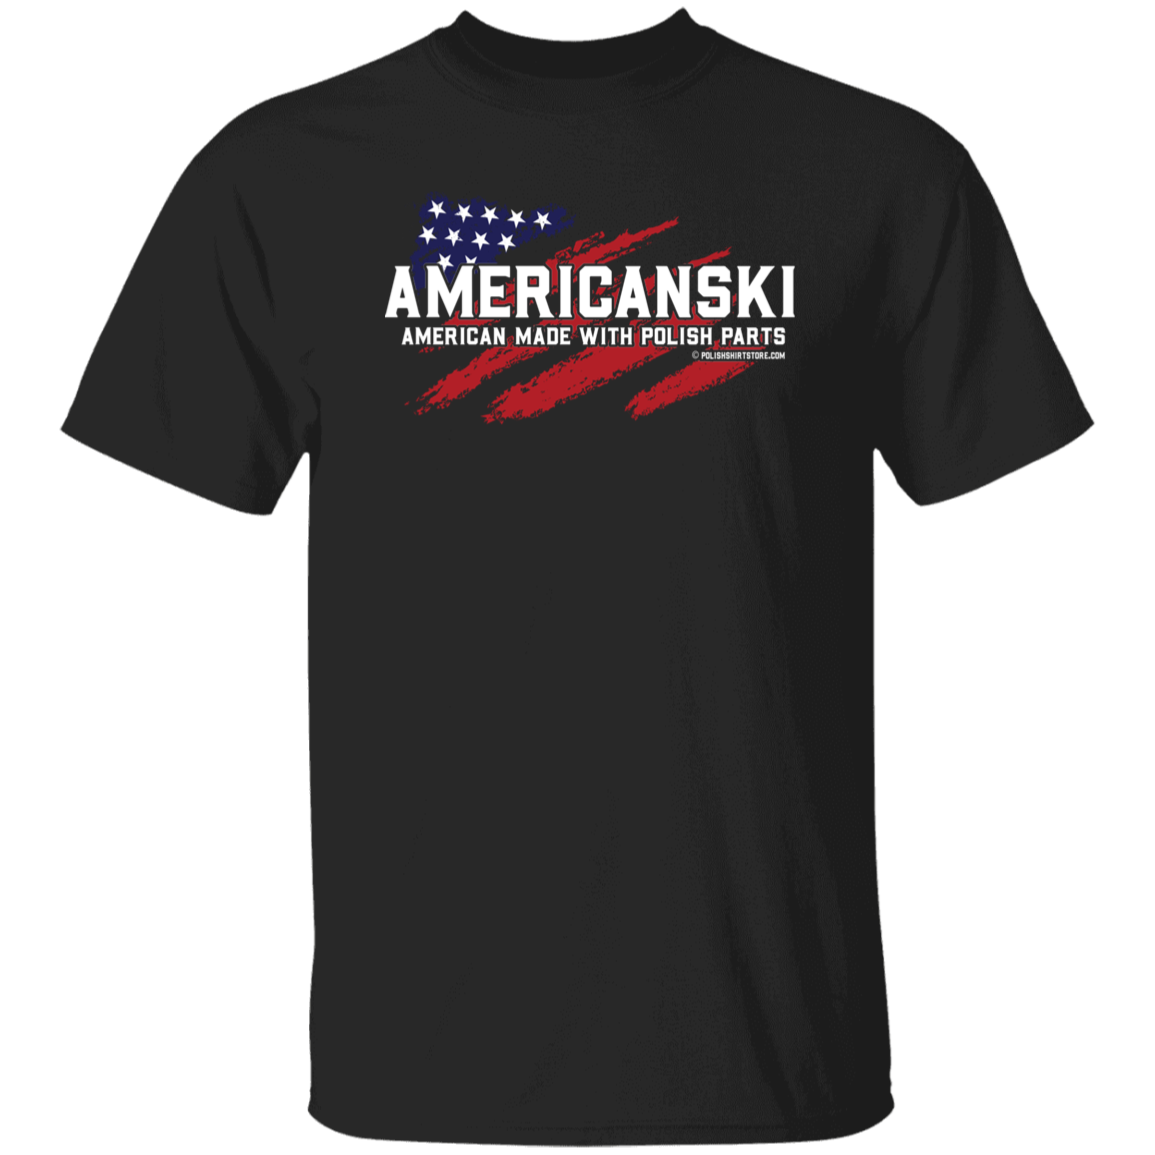 Americanski American Made With Polish Parts Apparel CustomCat G500 5.3 oz. T-Shirt Black S